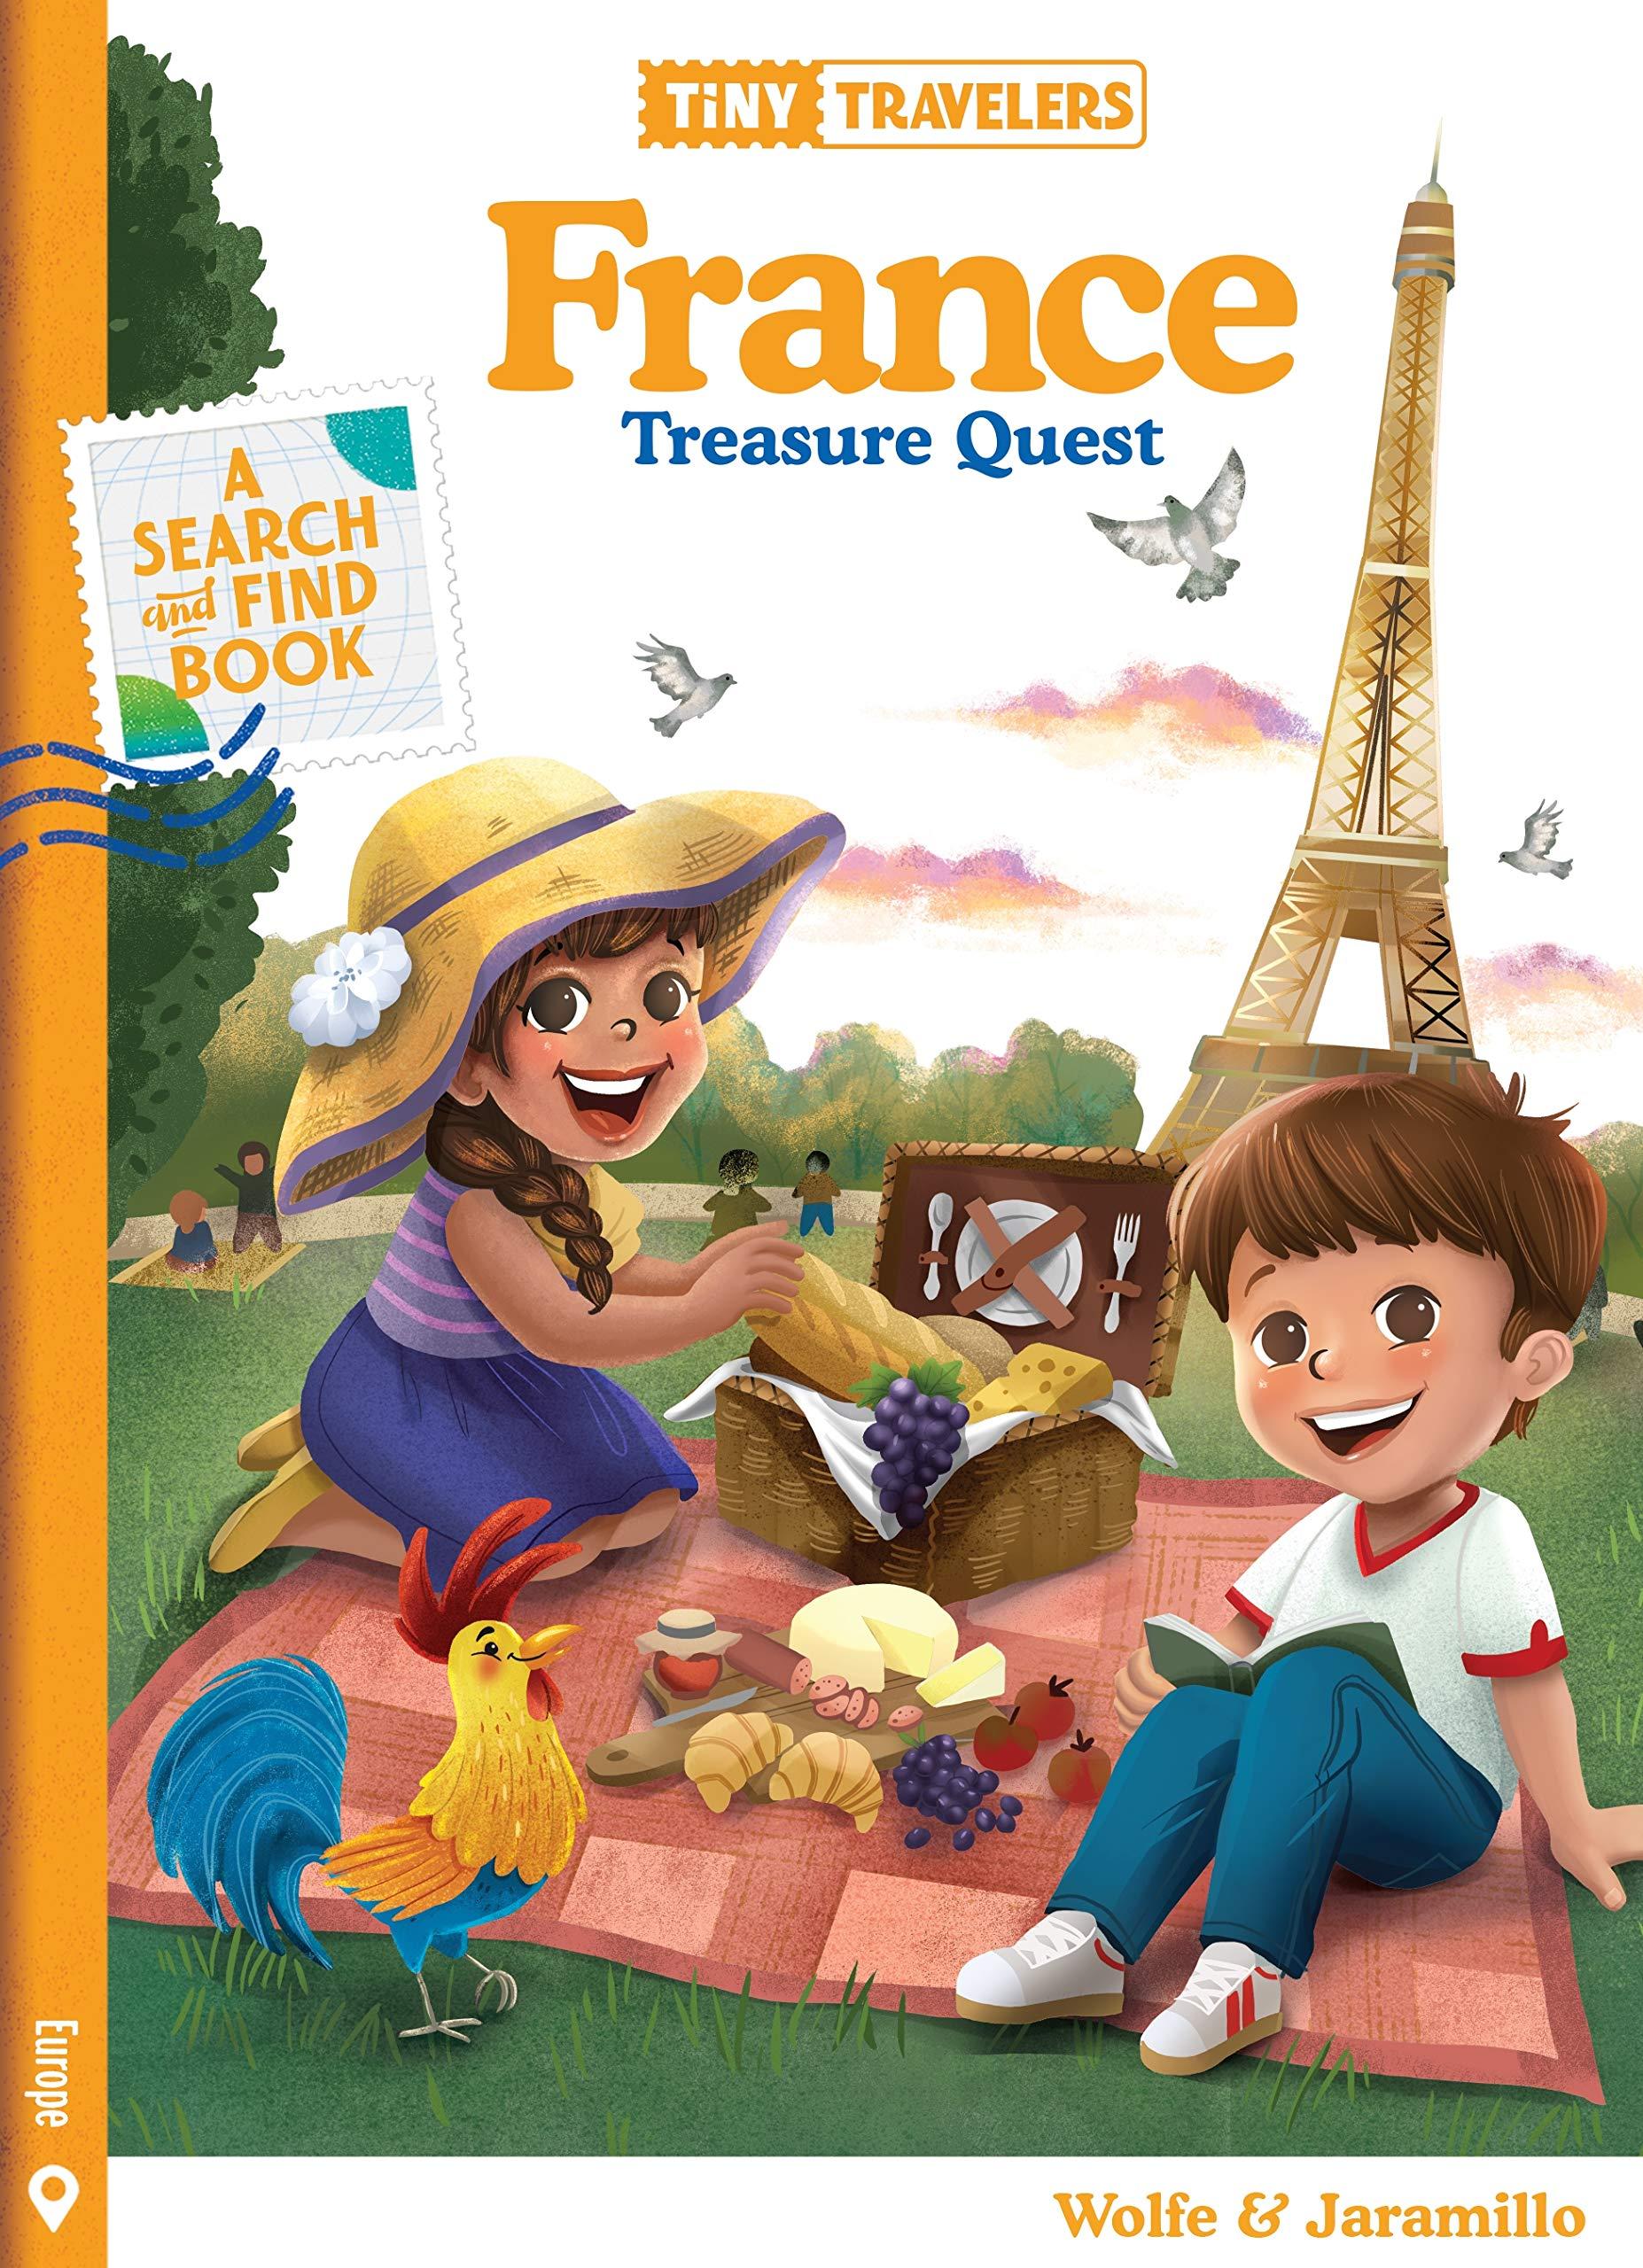 Tiny Travelers: France Treasure Quest